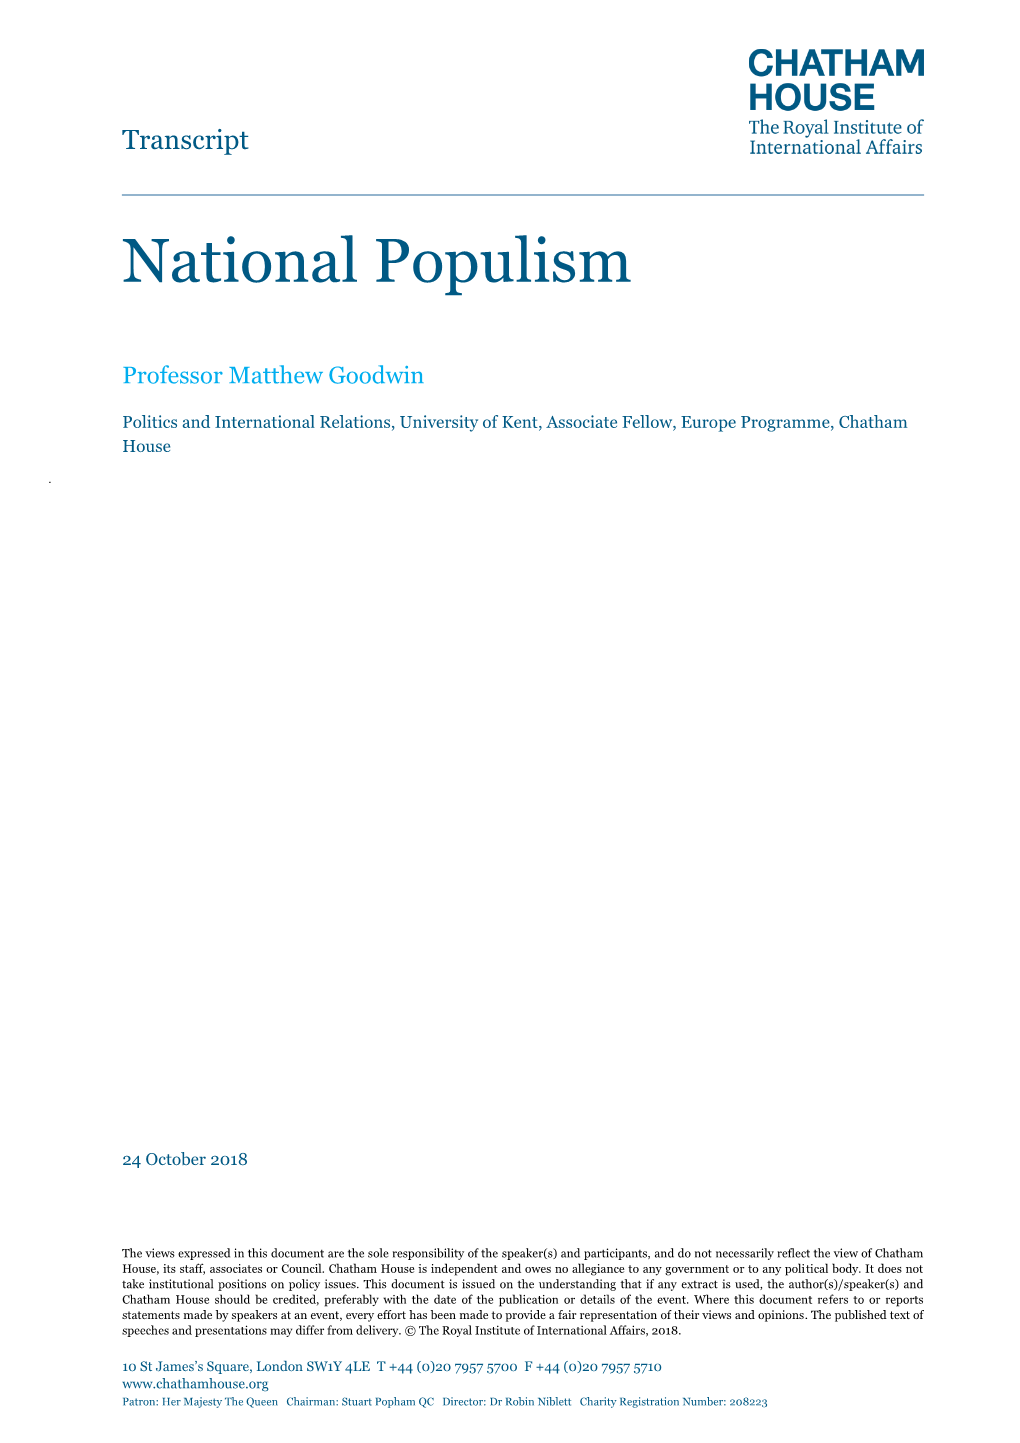 National Populism